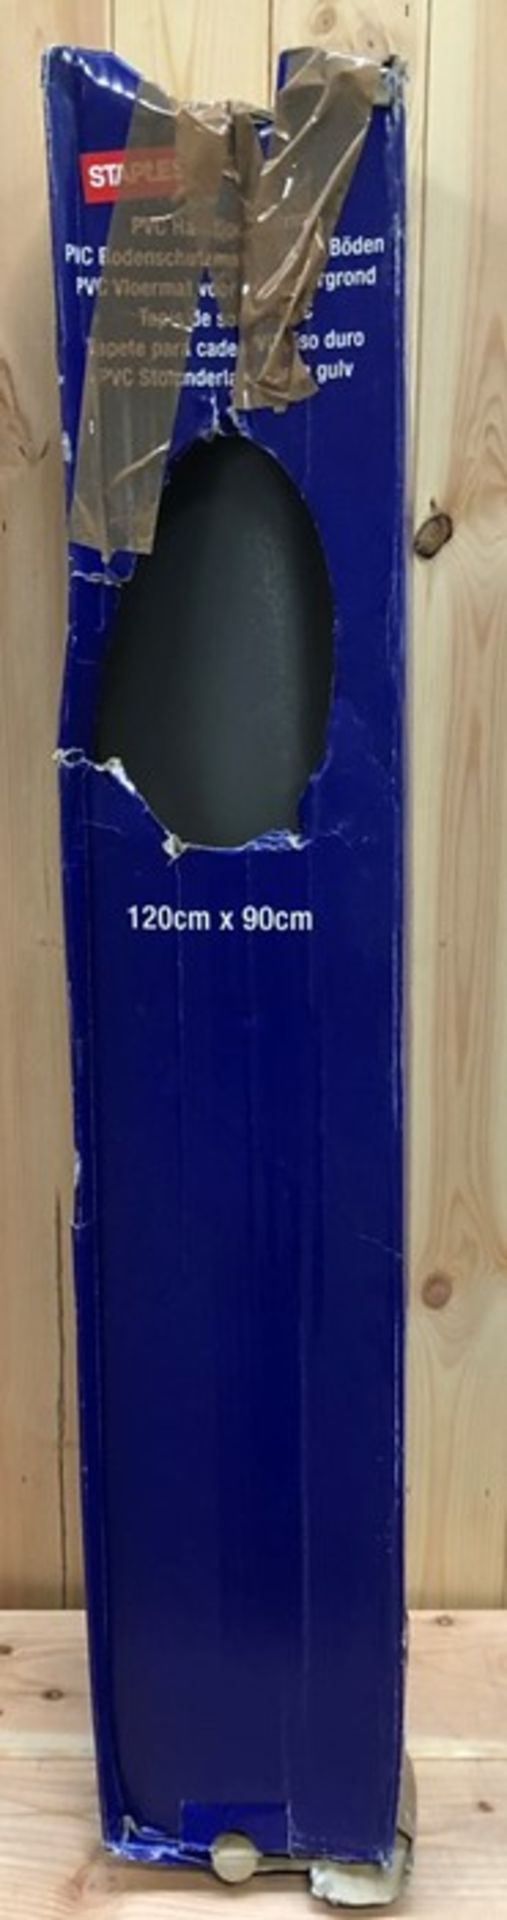 1 BOXED PVC HARD FLOOR CHAIRMAT / SIZE 120 X 90CM / RRP £35.99 (PUBLIC VIEWING AVAILABLE)